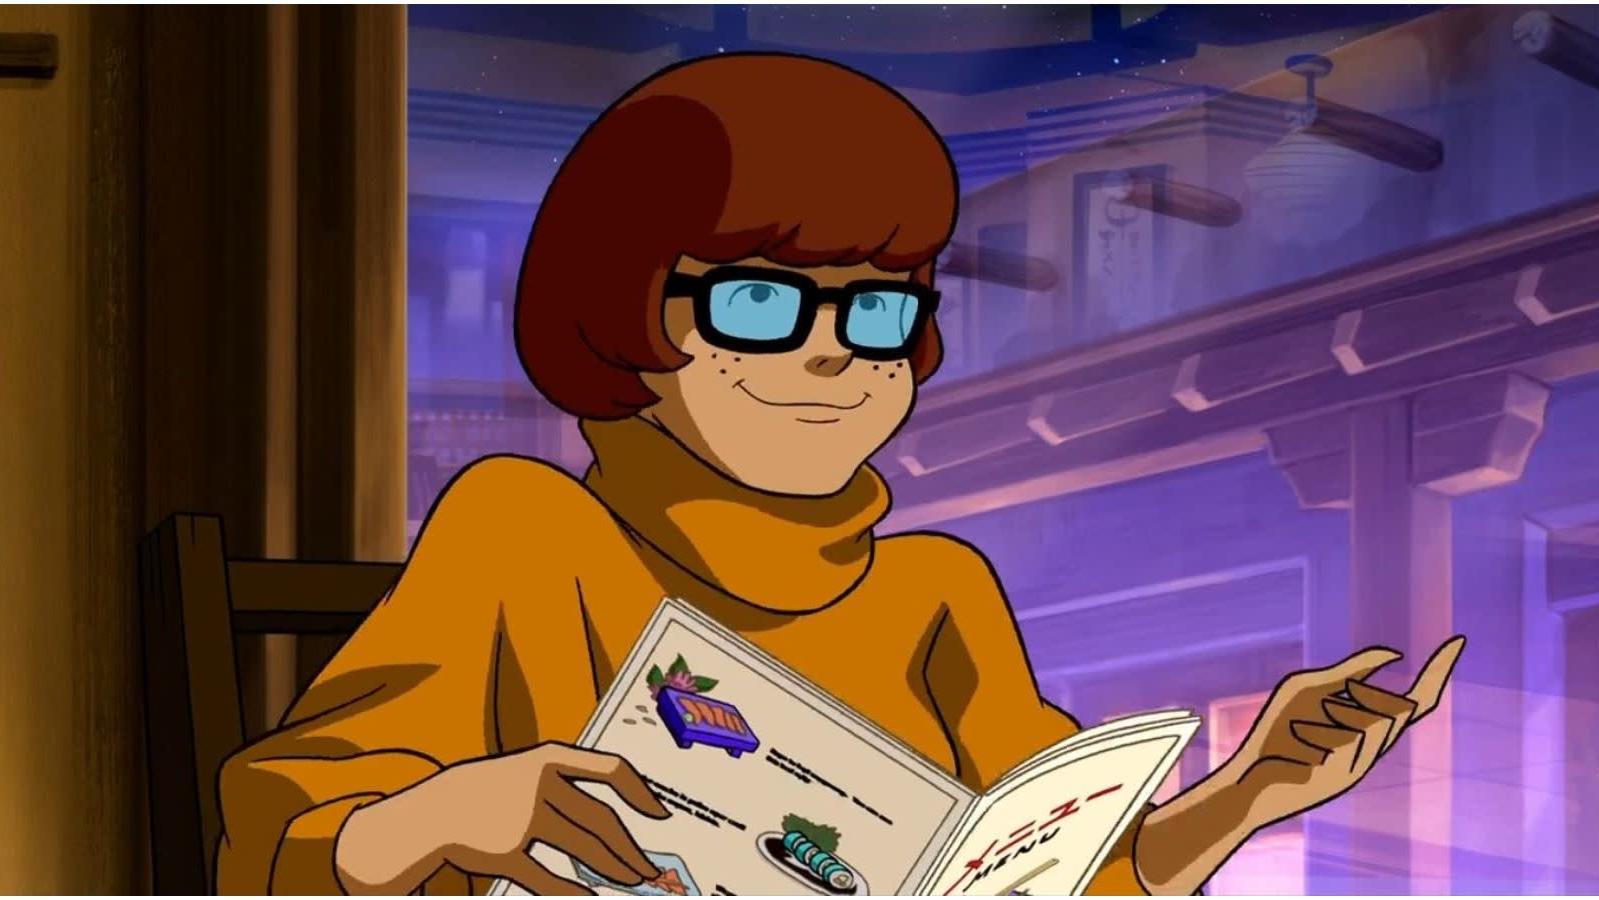 Velma - Scooby Doo - Imaginary future version - Character profile 